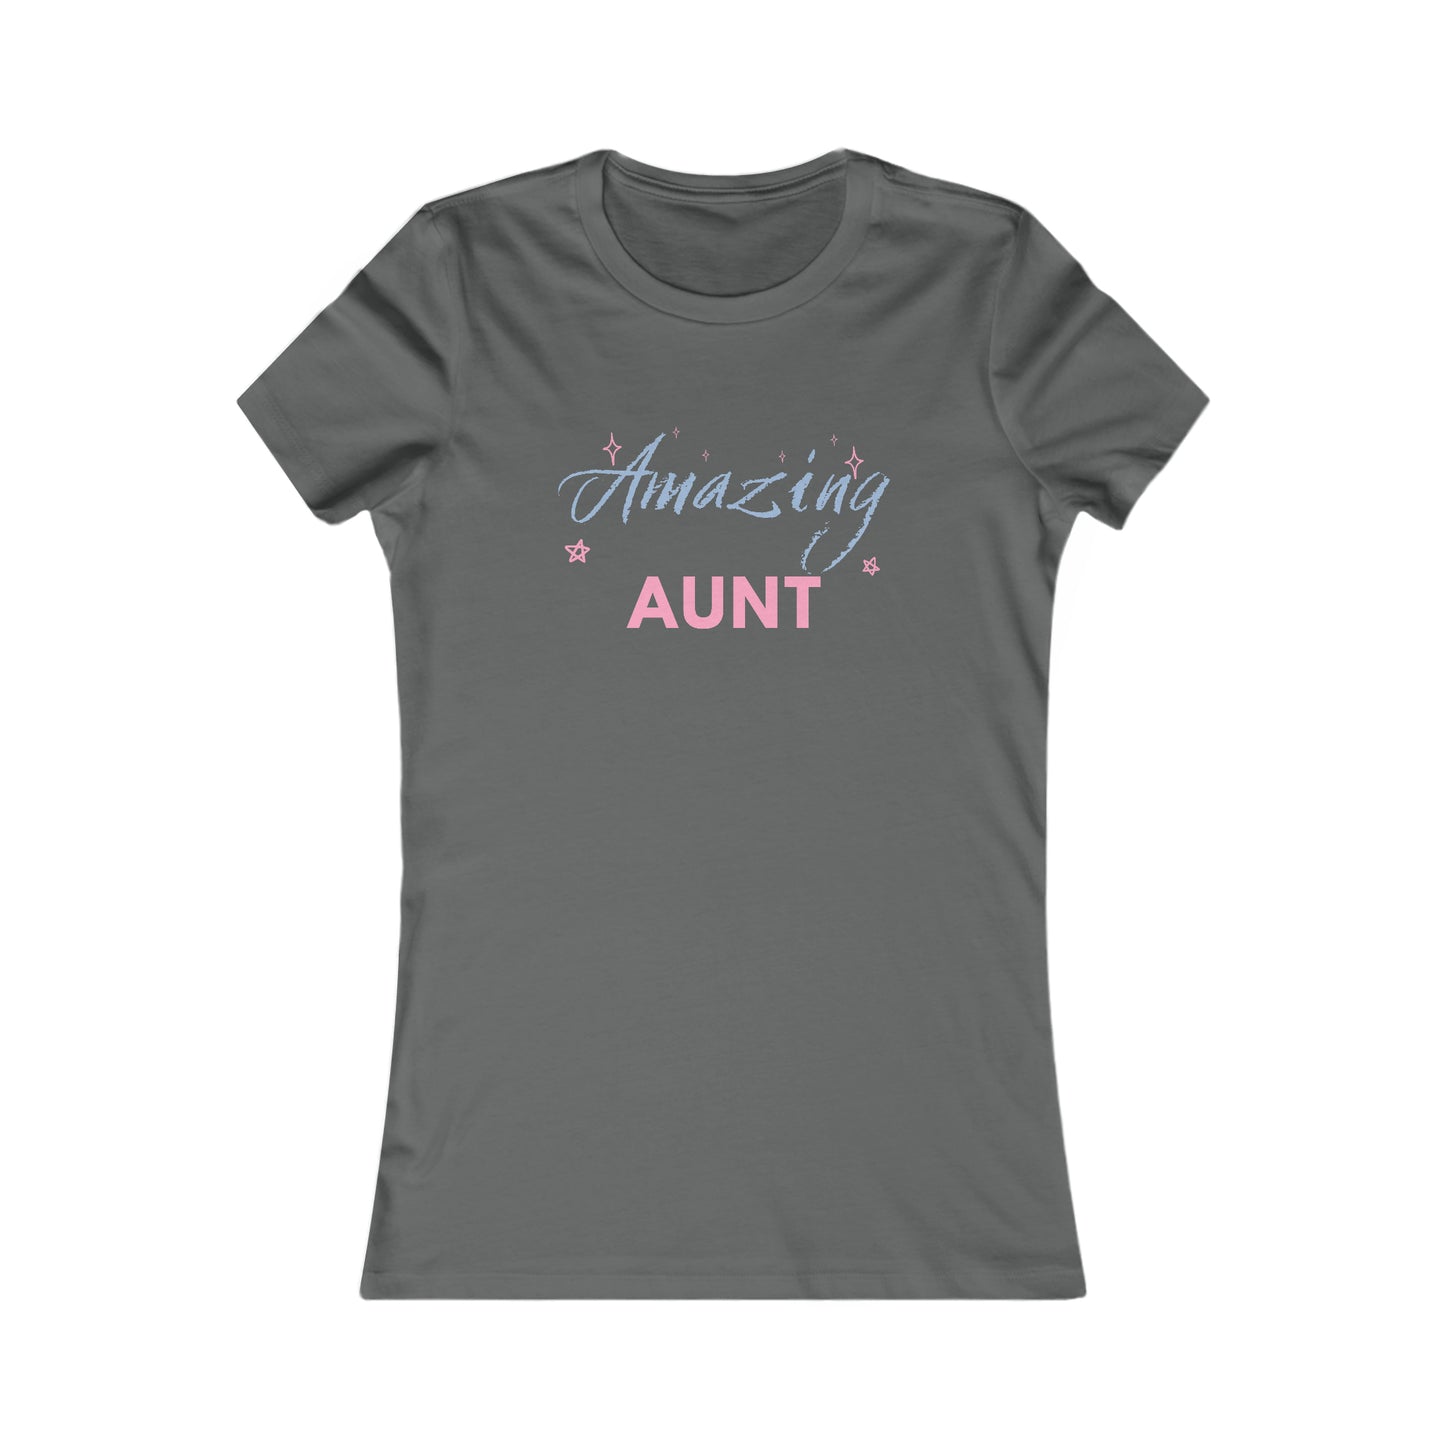 Amazing Aunt Women's Favorite Tee - Trendy Design for Gift